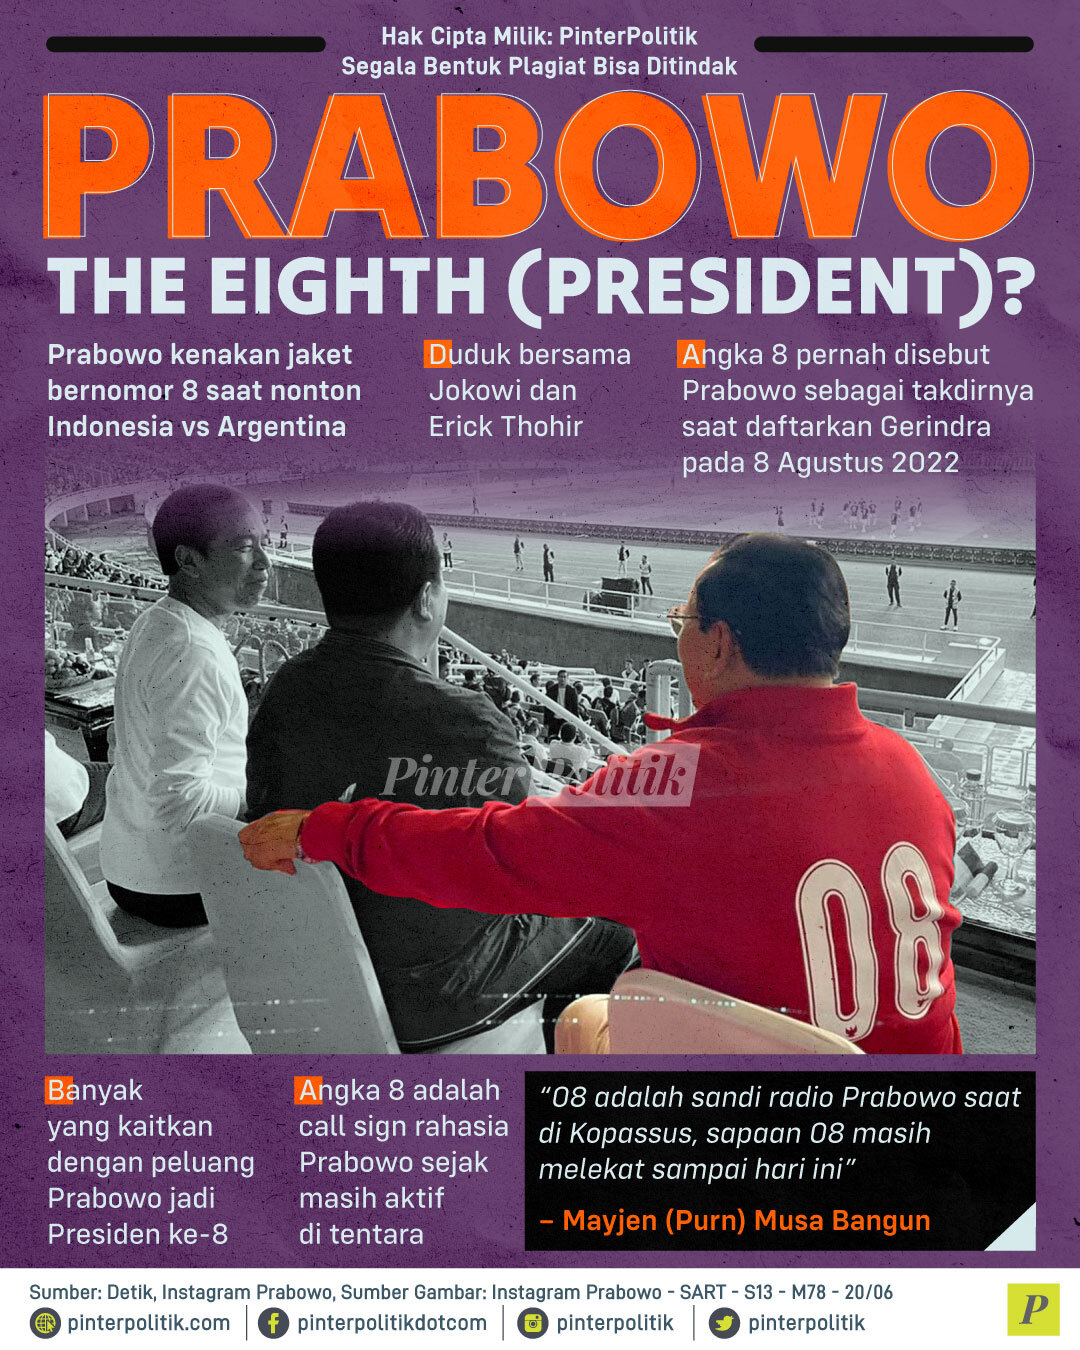 prabowo the eighth president